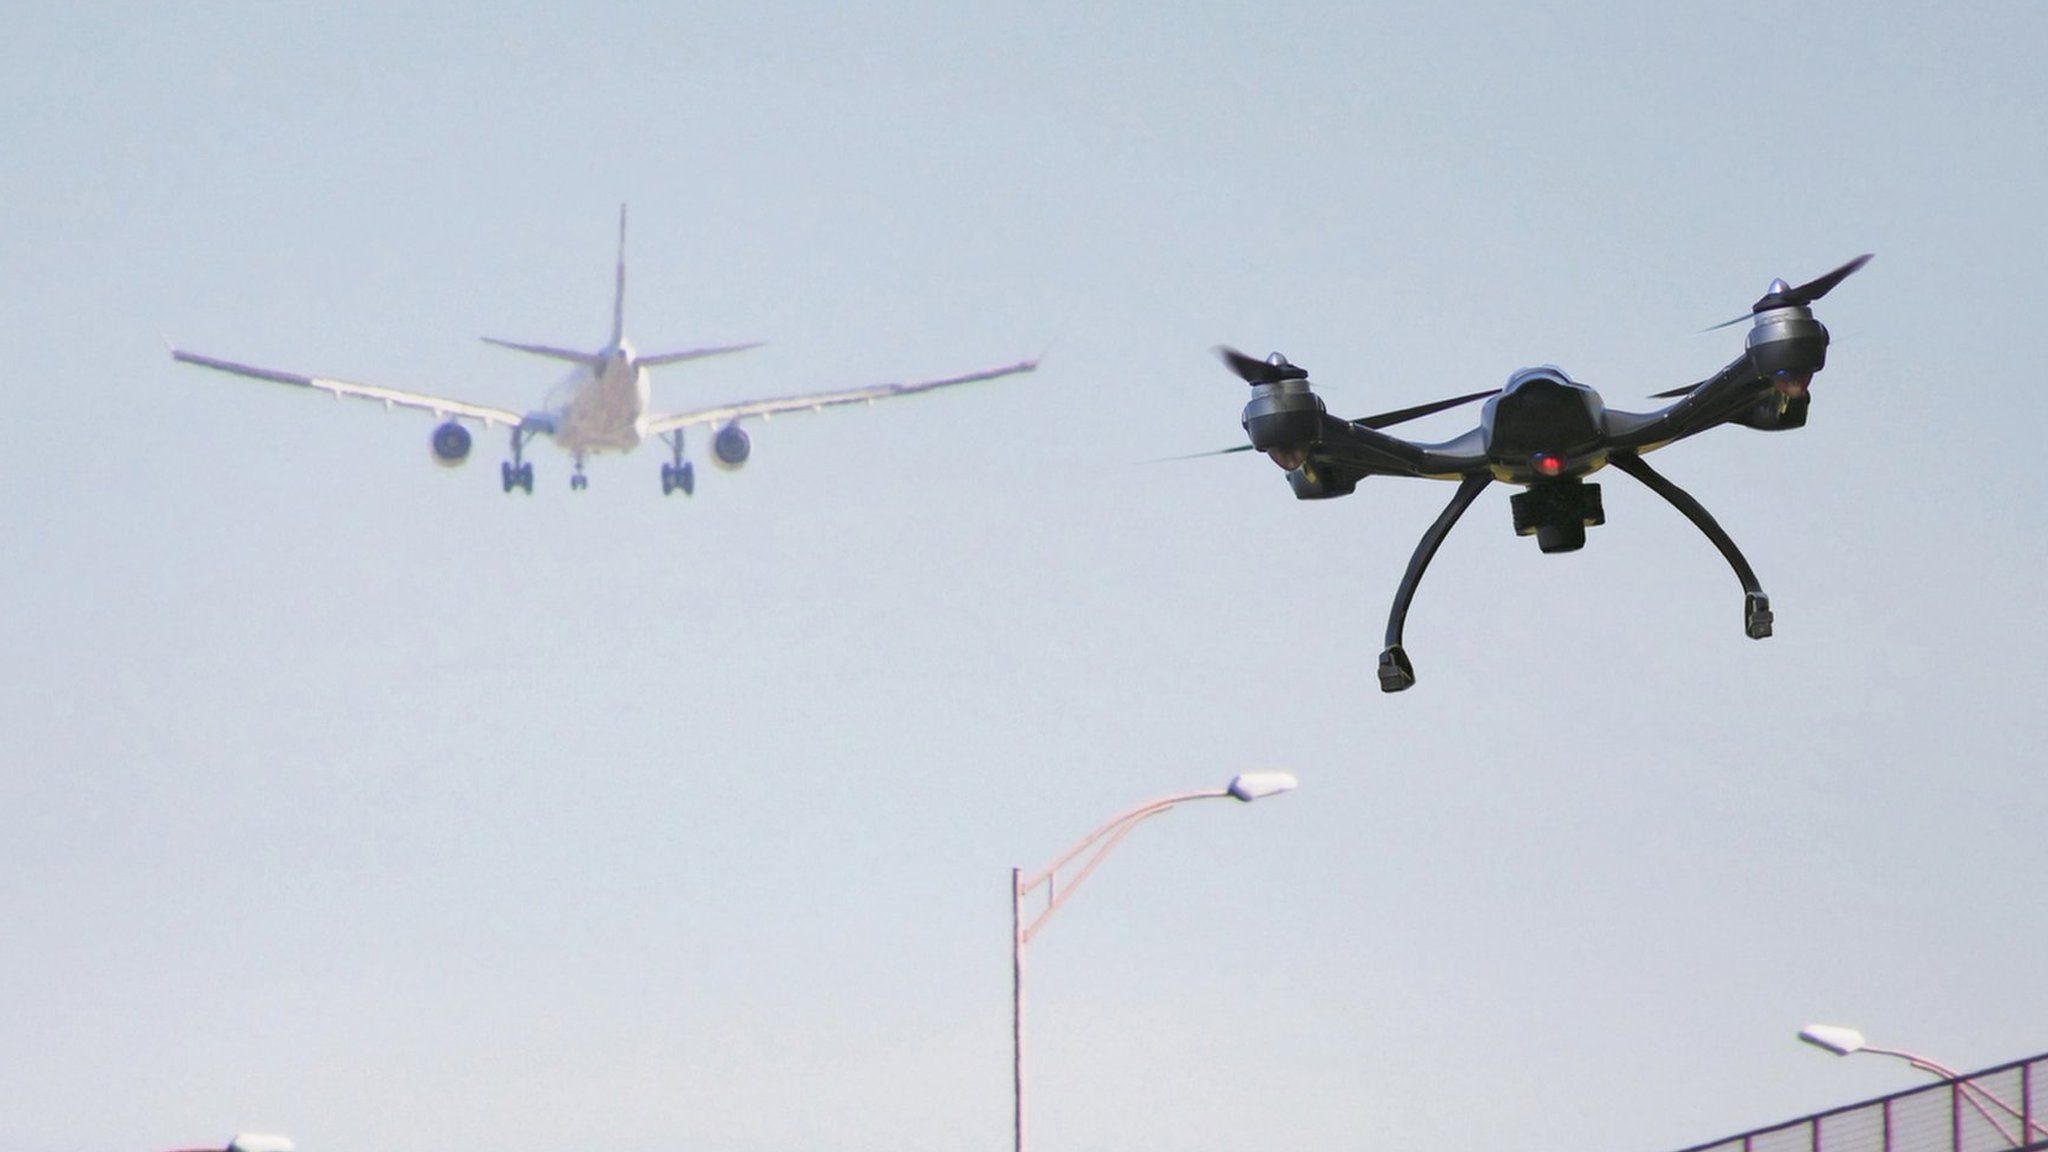 Drone being flown near a plane